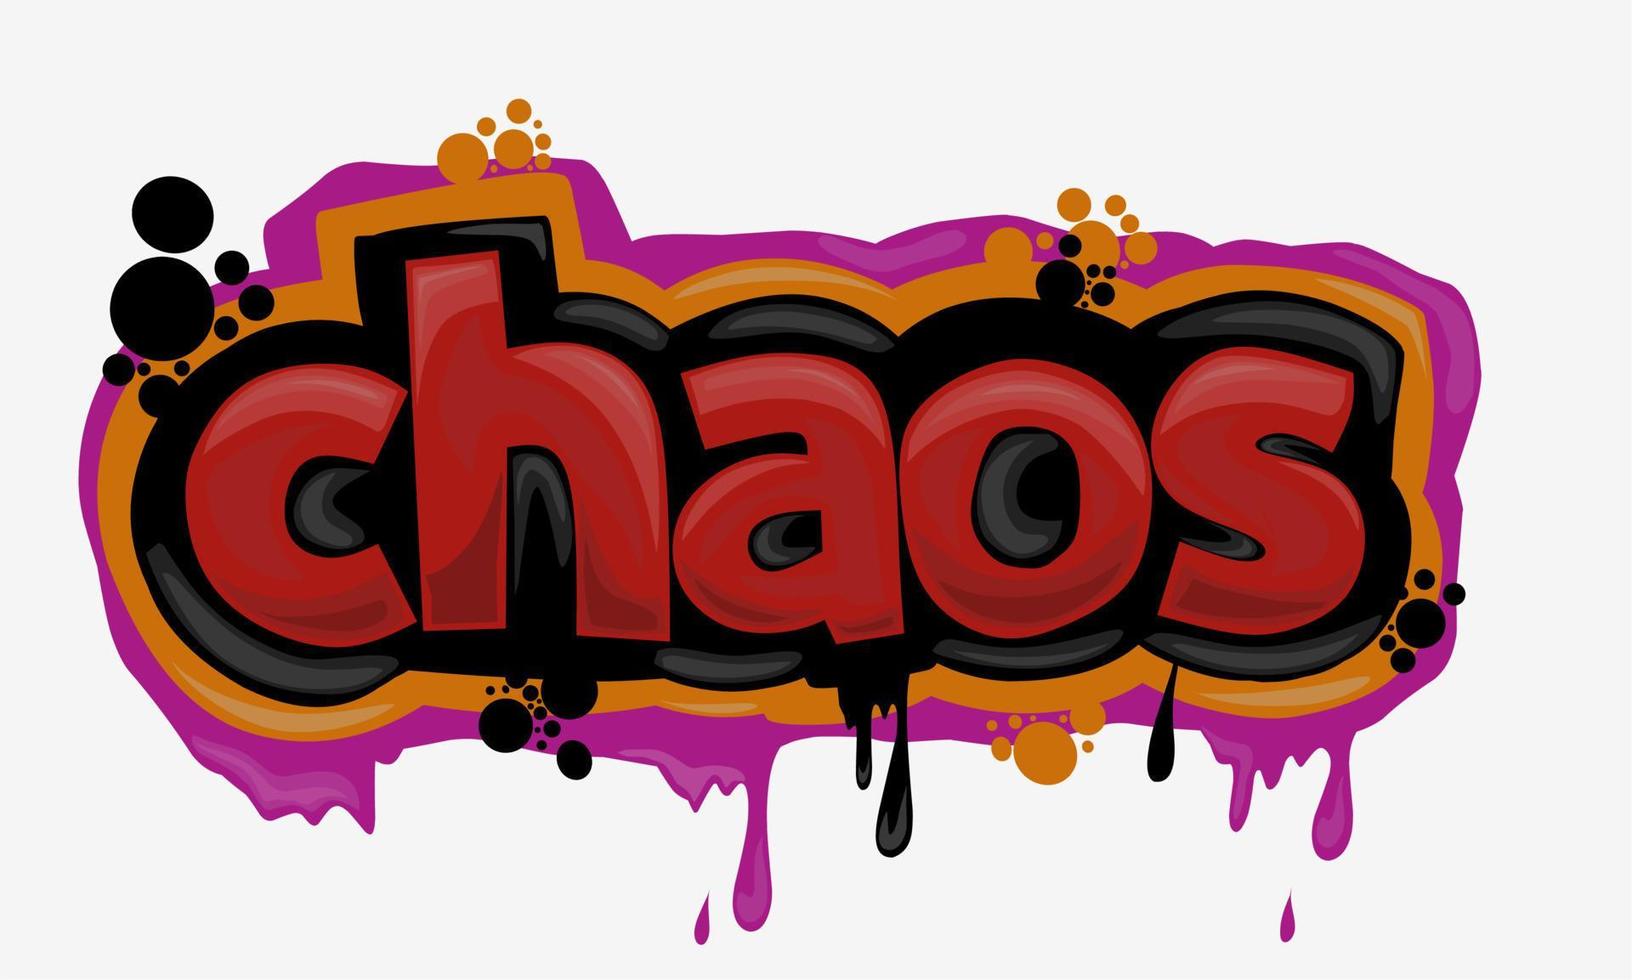 cooles Chaos-Schreiben-Graffiti-Design vektor